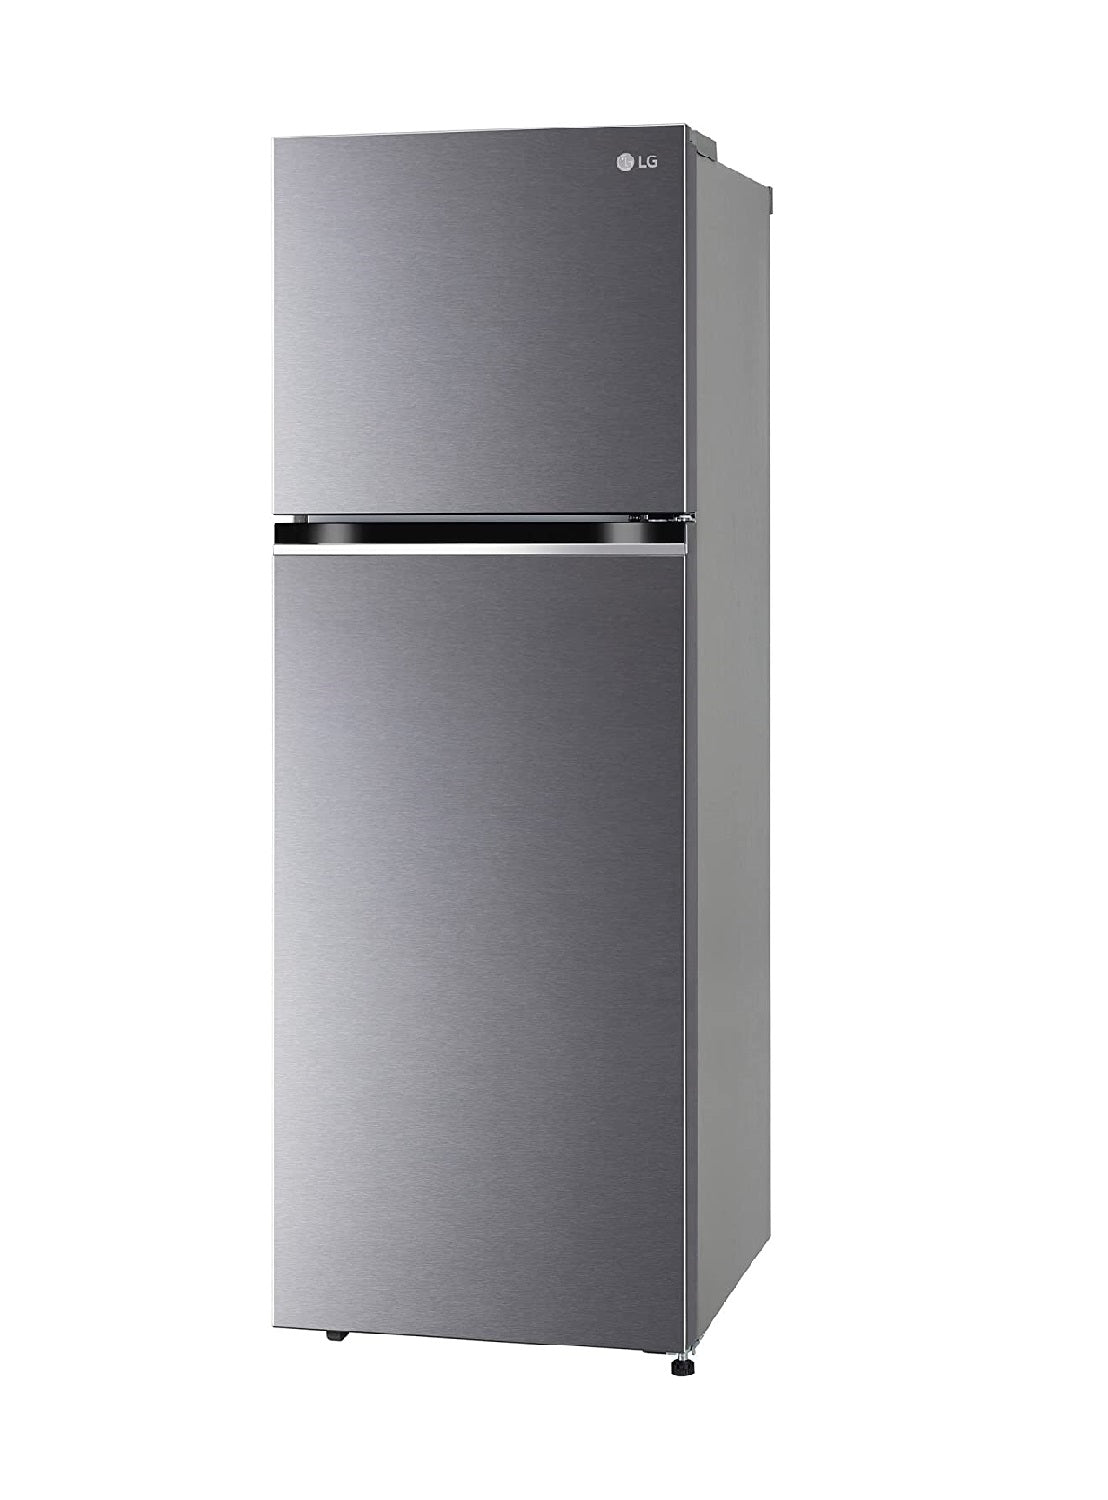 LG GL-S262SDSX 246 L Convertible Double Door Refrigerator